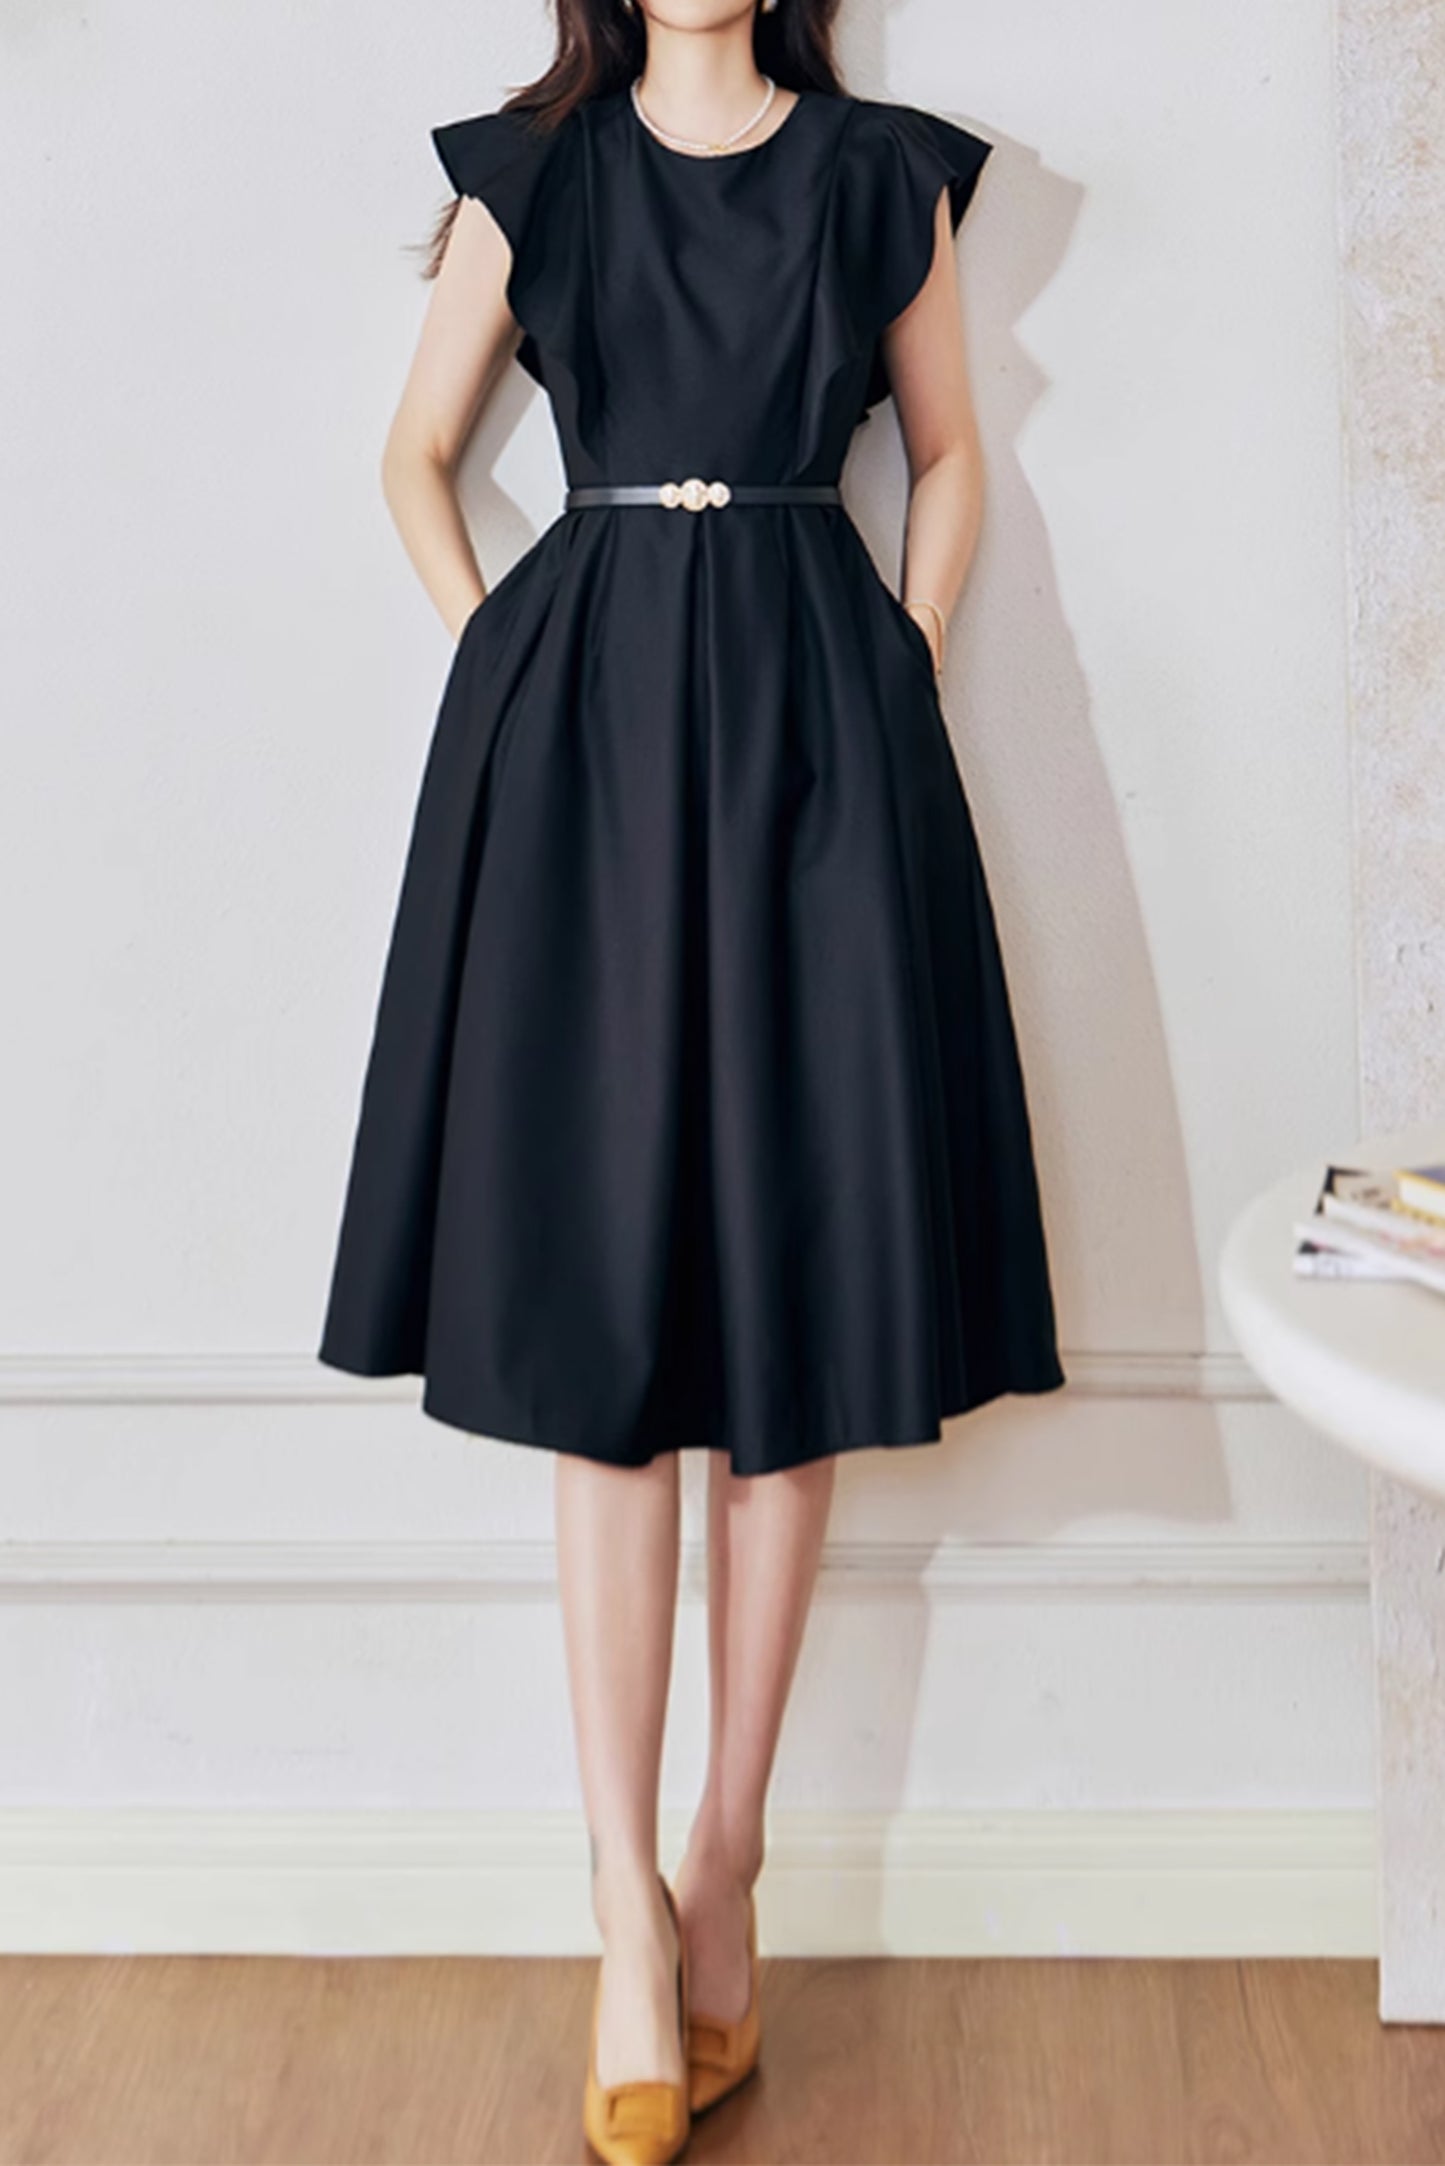 Knee length elegant summer dresses with ruffle sleeves 4859